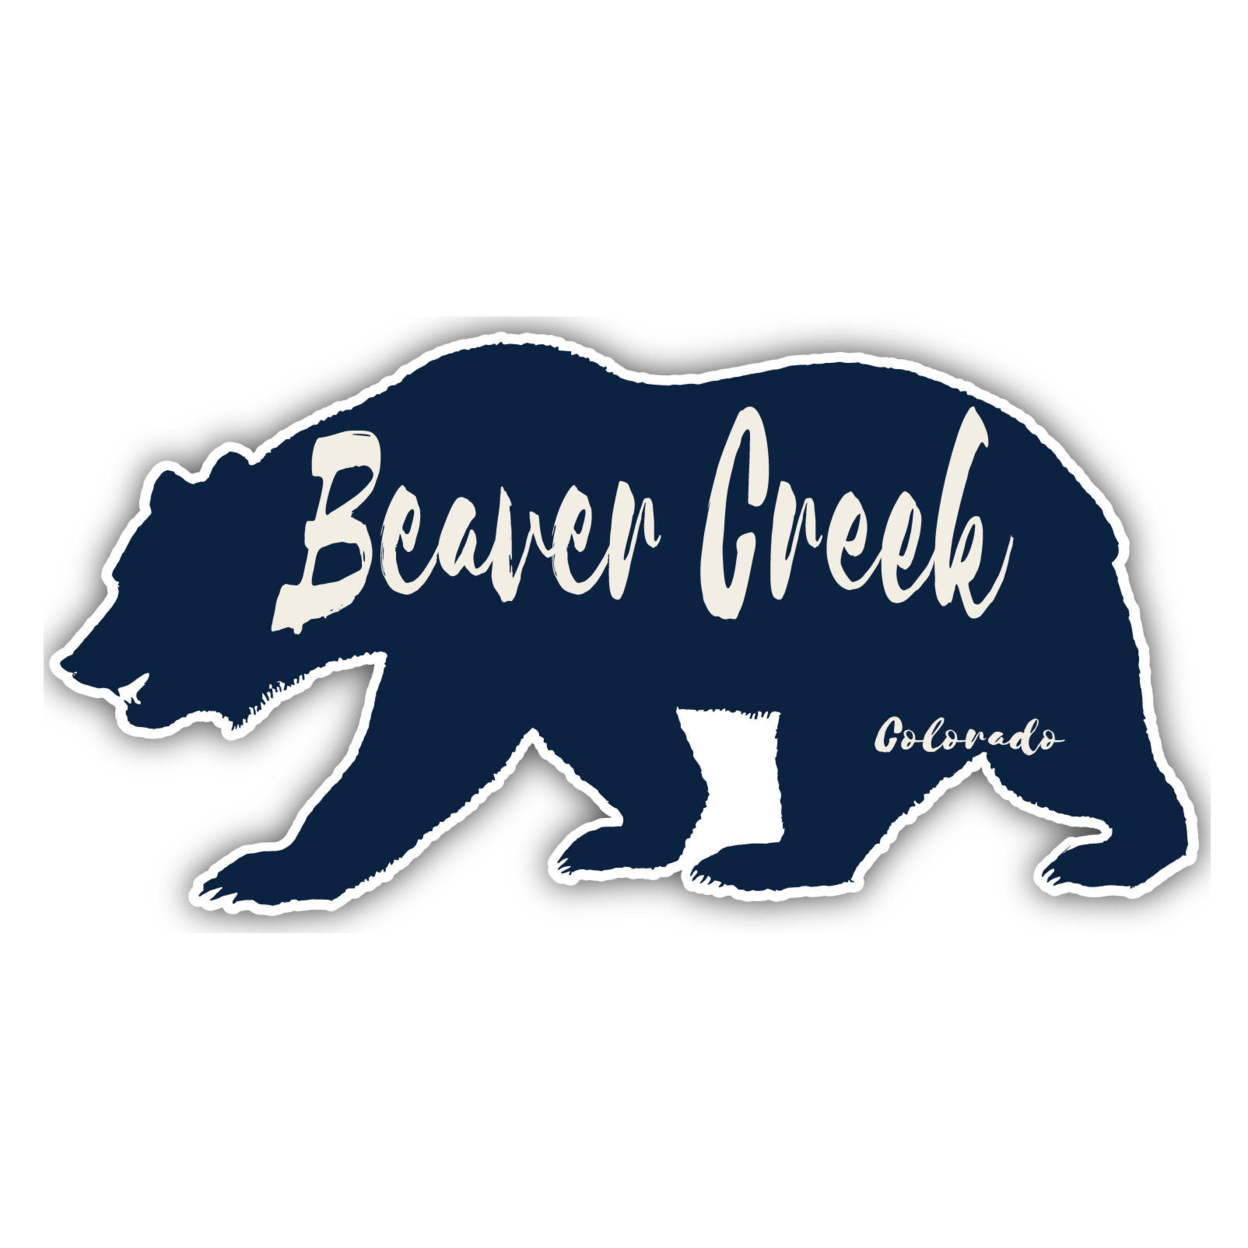 Beaver Creek Colorado Souvenir Decorative Stickers (Choose Theme And Size) - Single Unit, 6-Inch, Great Outdoors